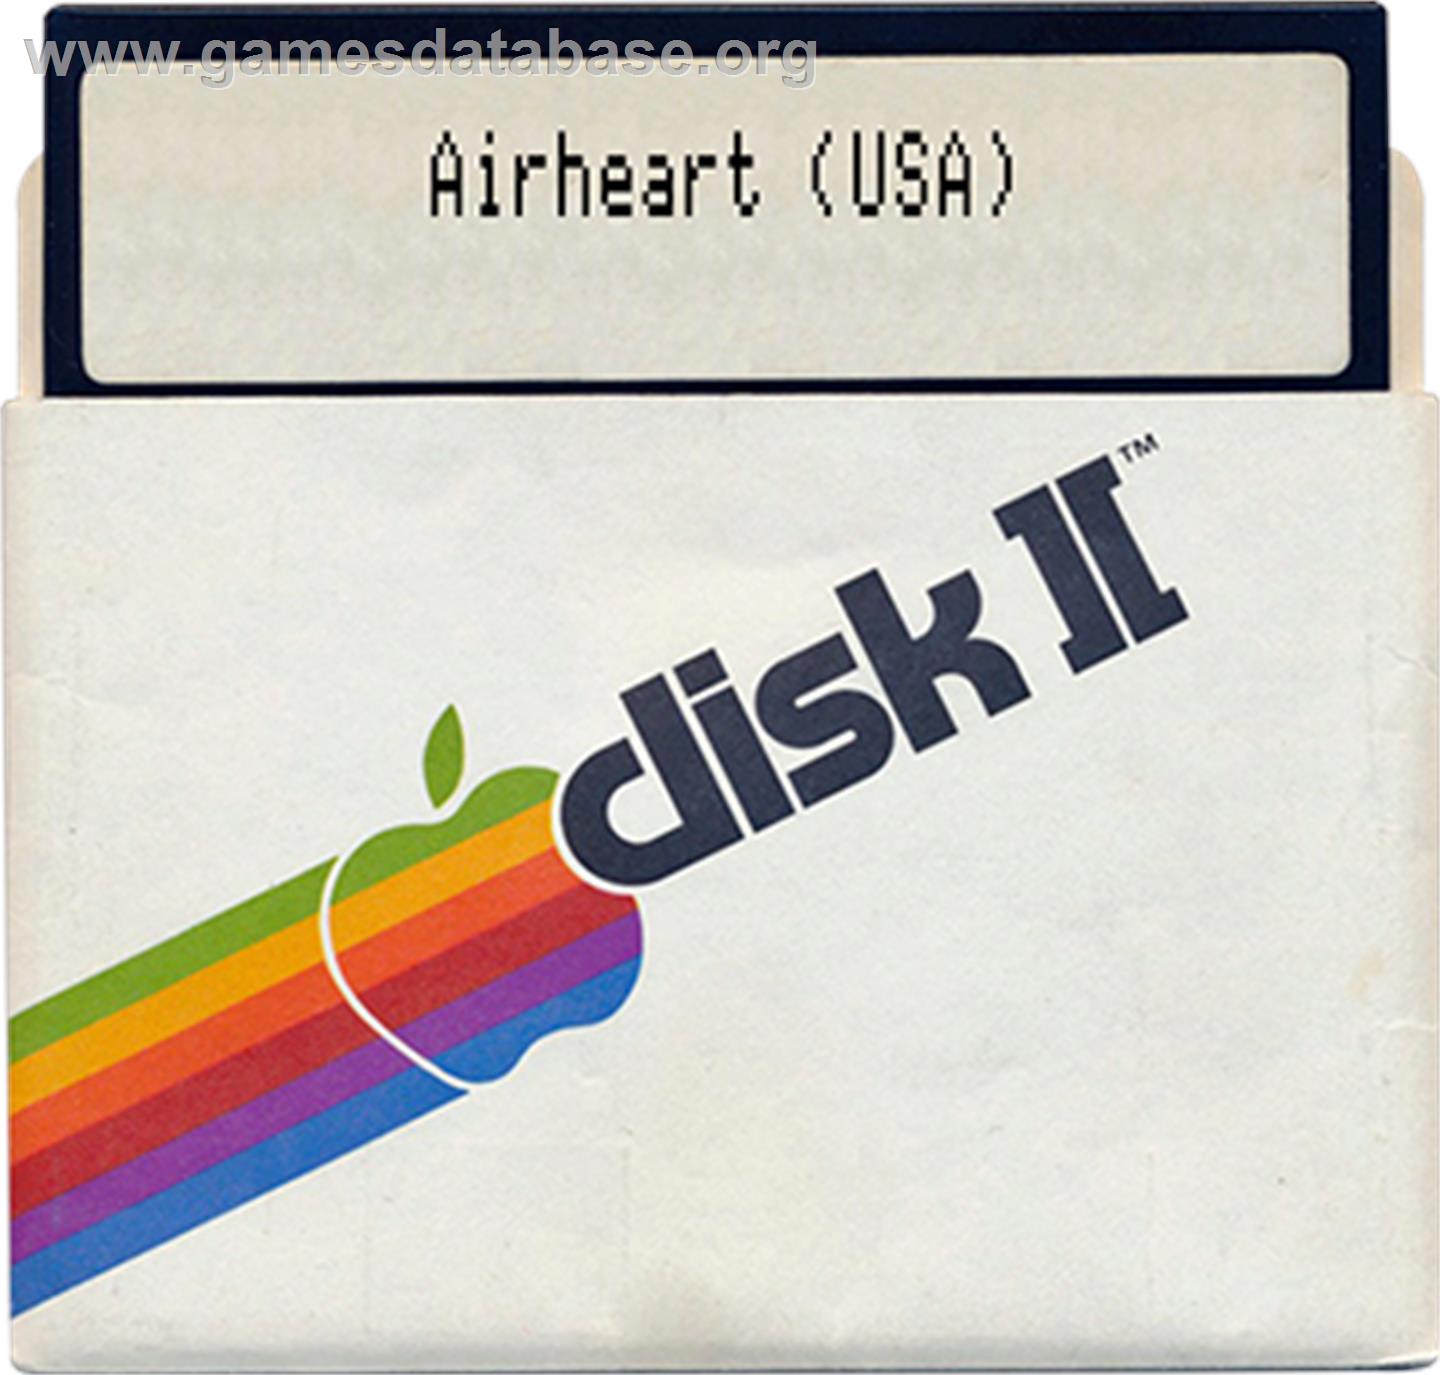 Airheart - Apple II - Artwork - Disc